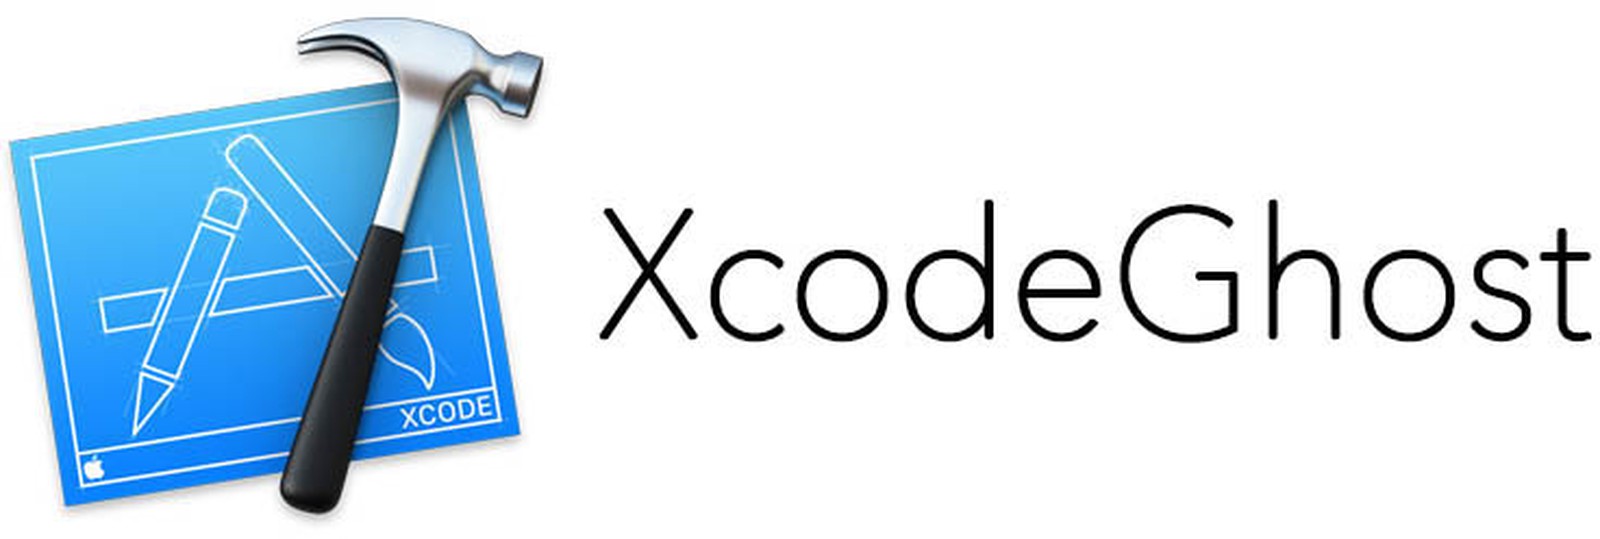 2015 年的 XcodeGhost 感染了 1.28 亿 iOS 用户